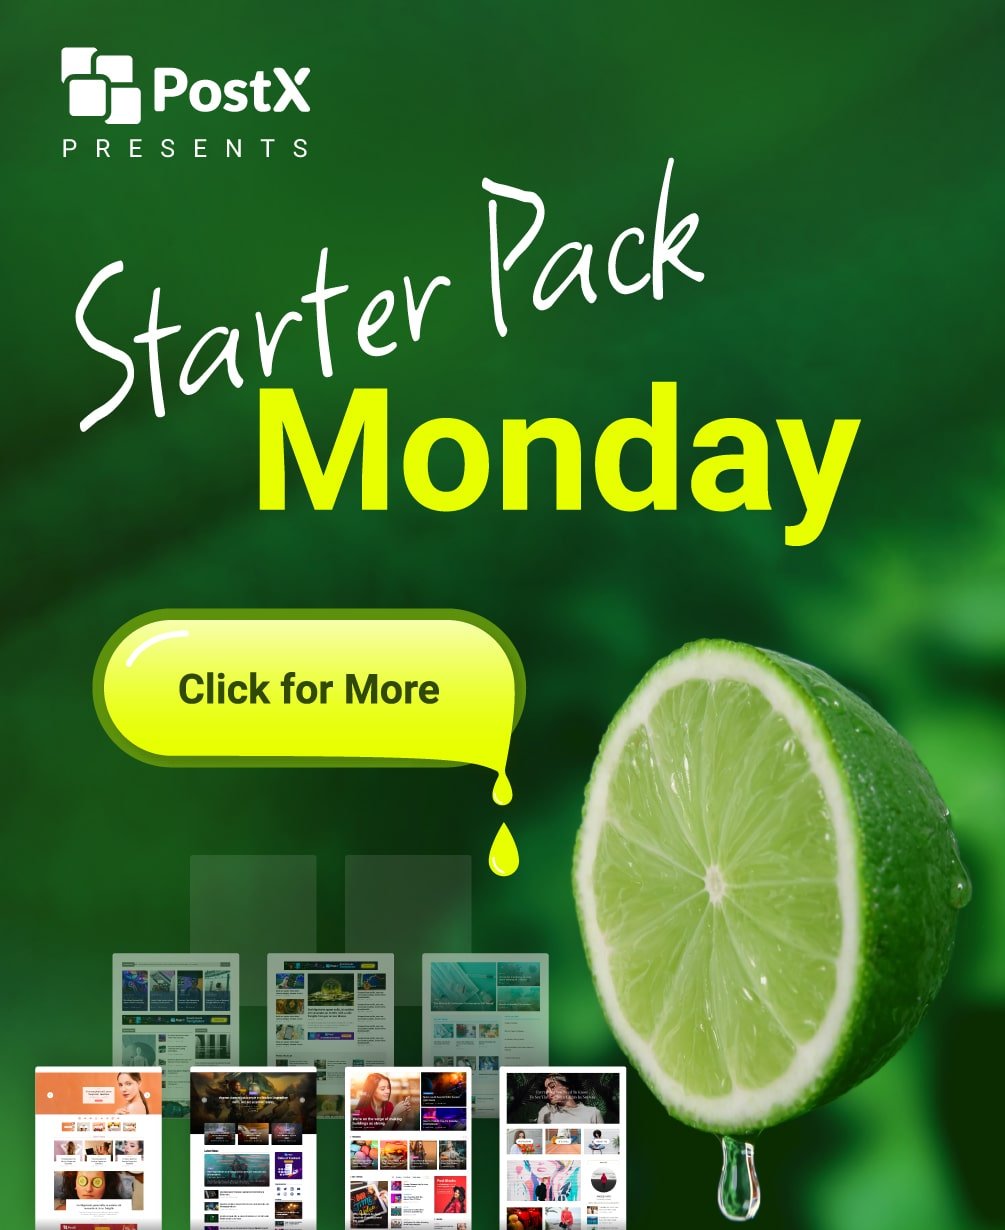 PostX: Starter Pack Monday